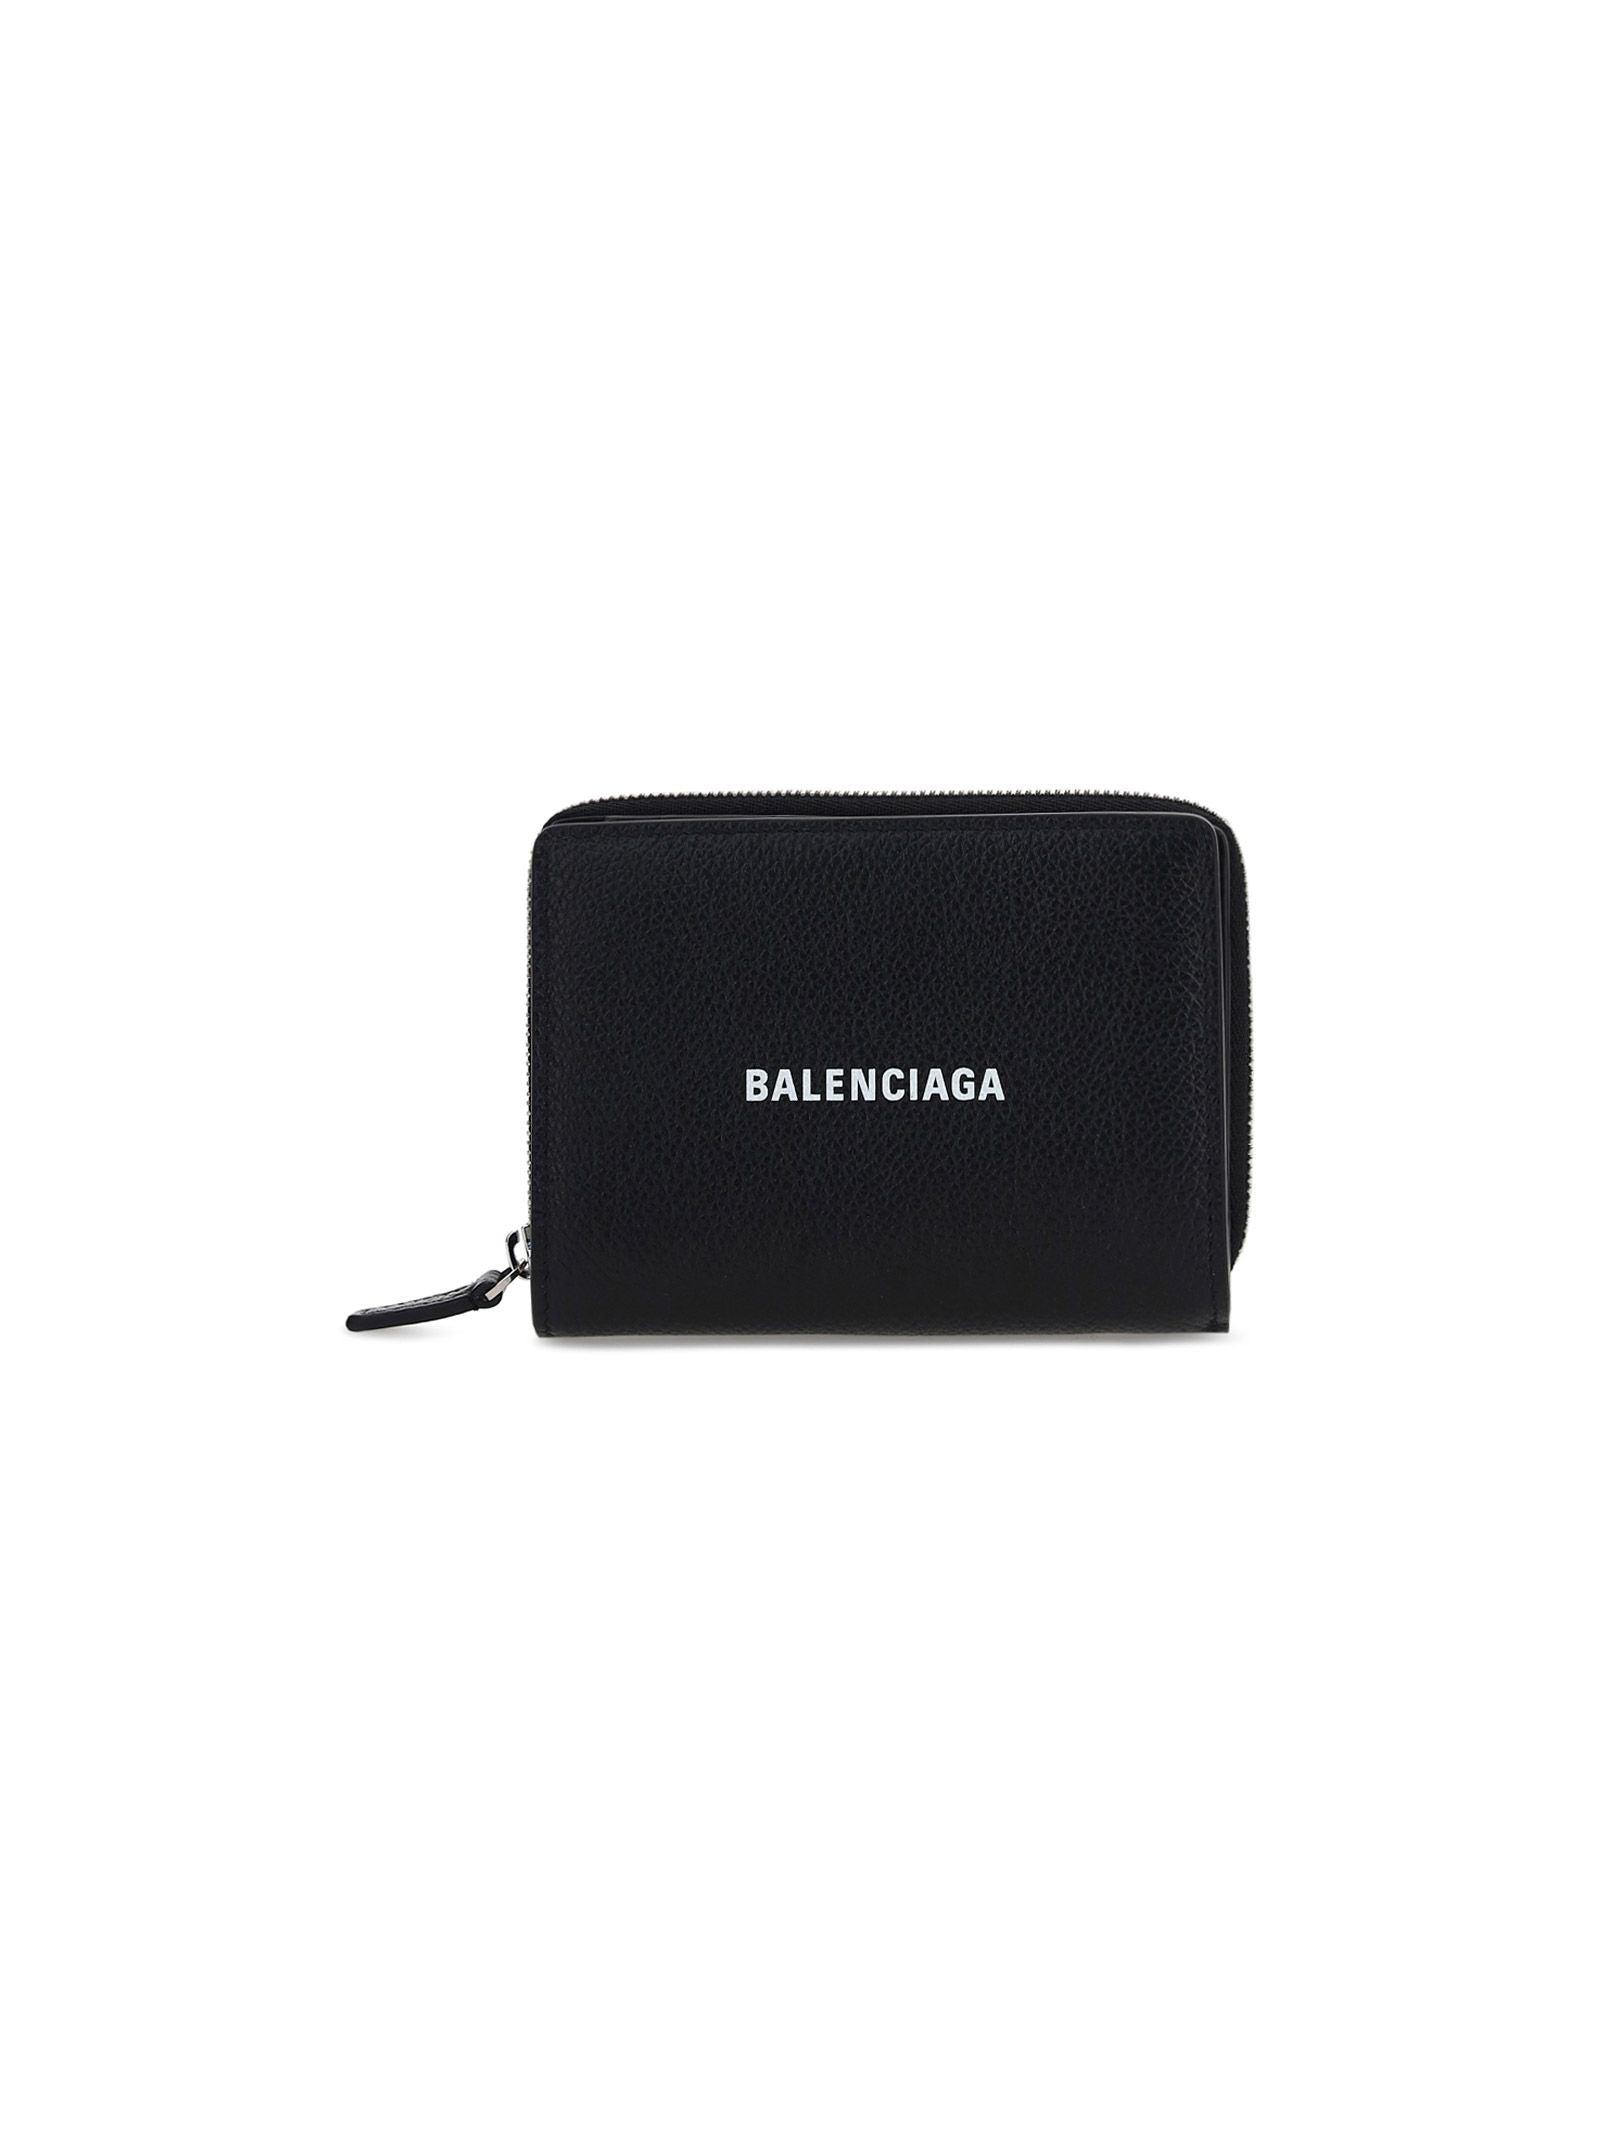 Balenciaga Leather Wallet in Black for Men | Lyst